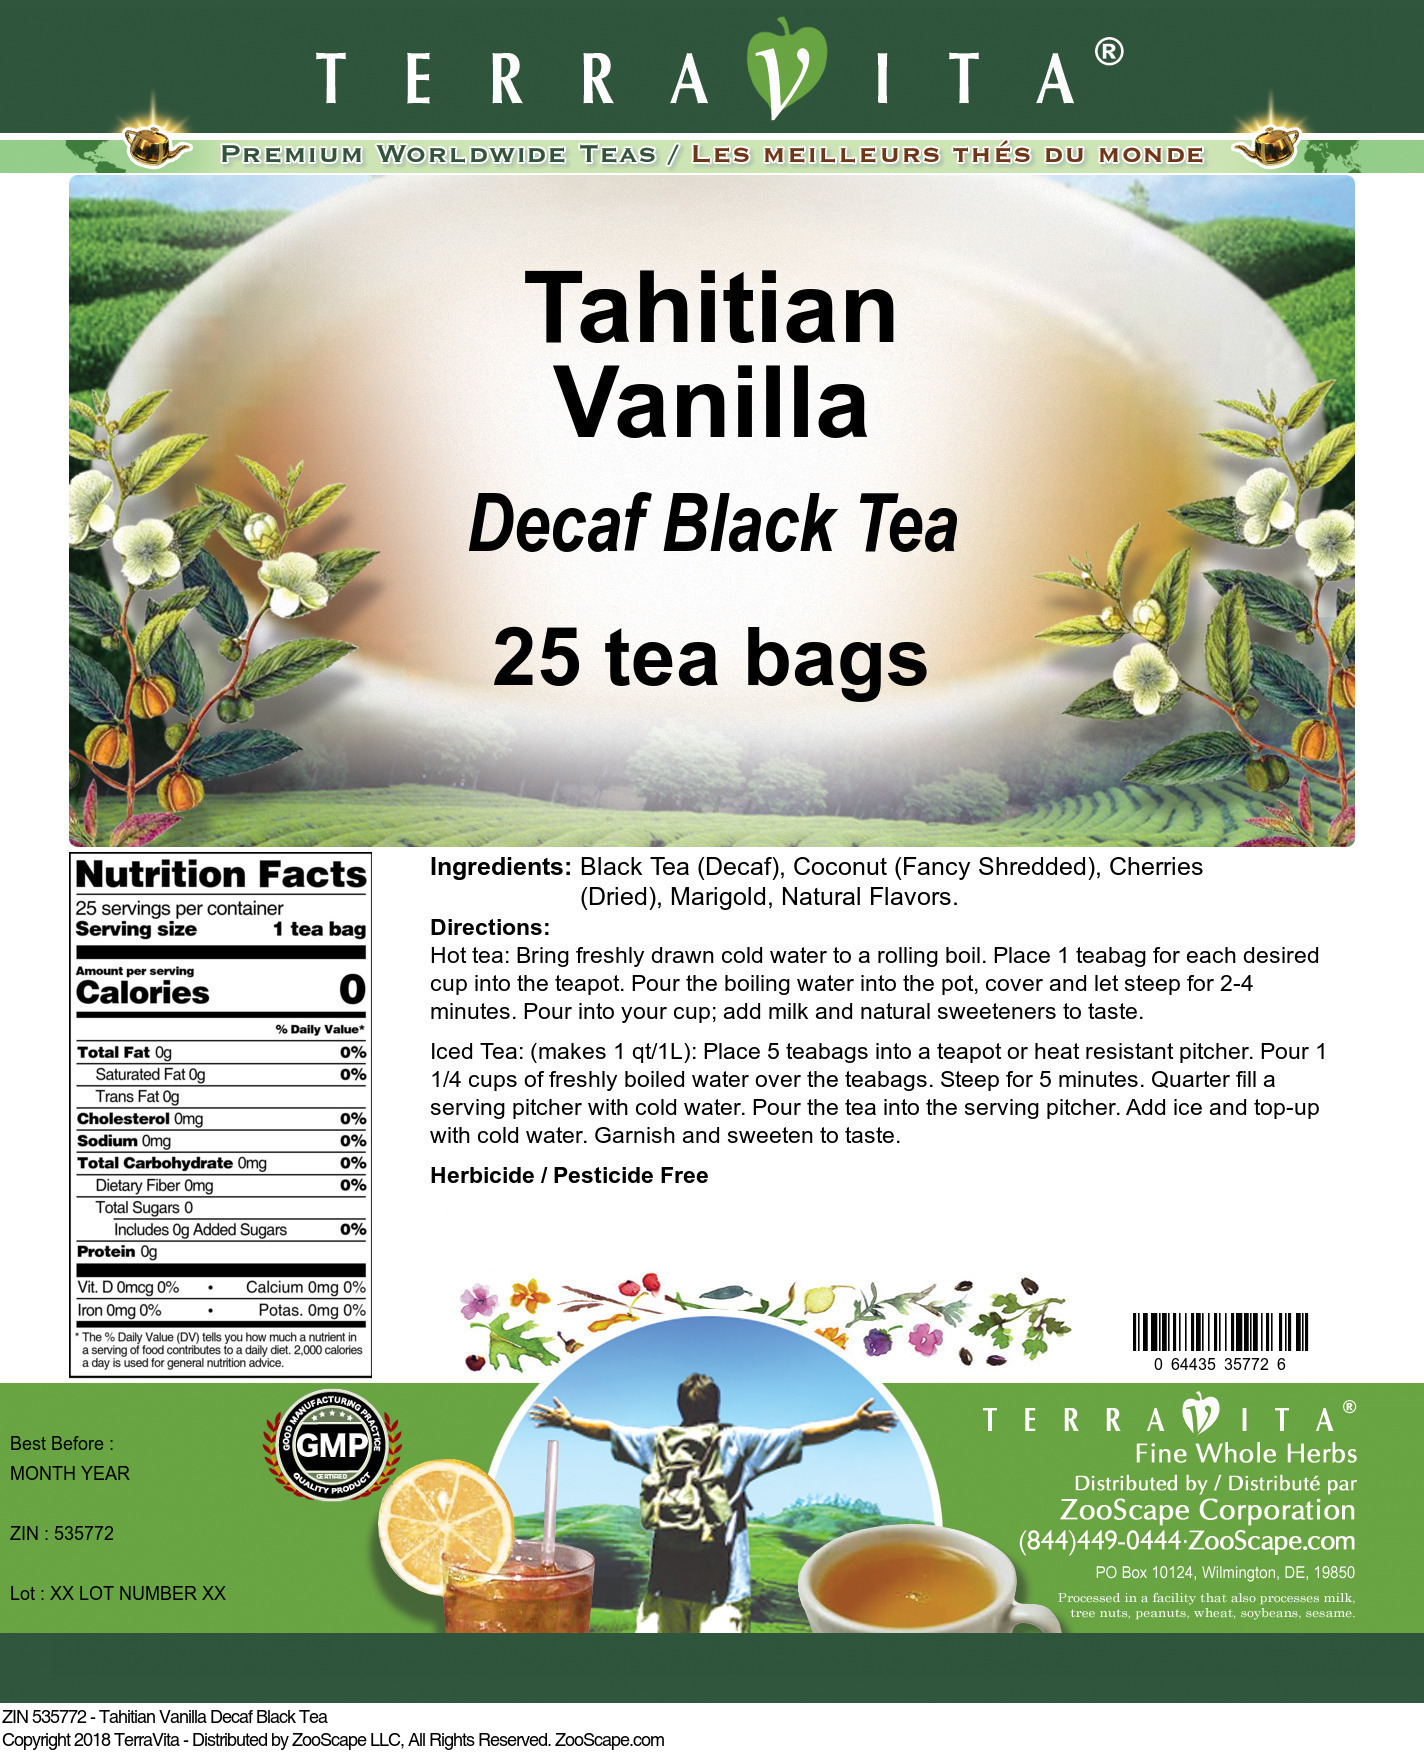 Tahitian Vanilla Decaf Black Tea - Label